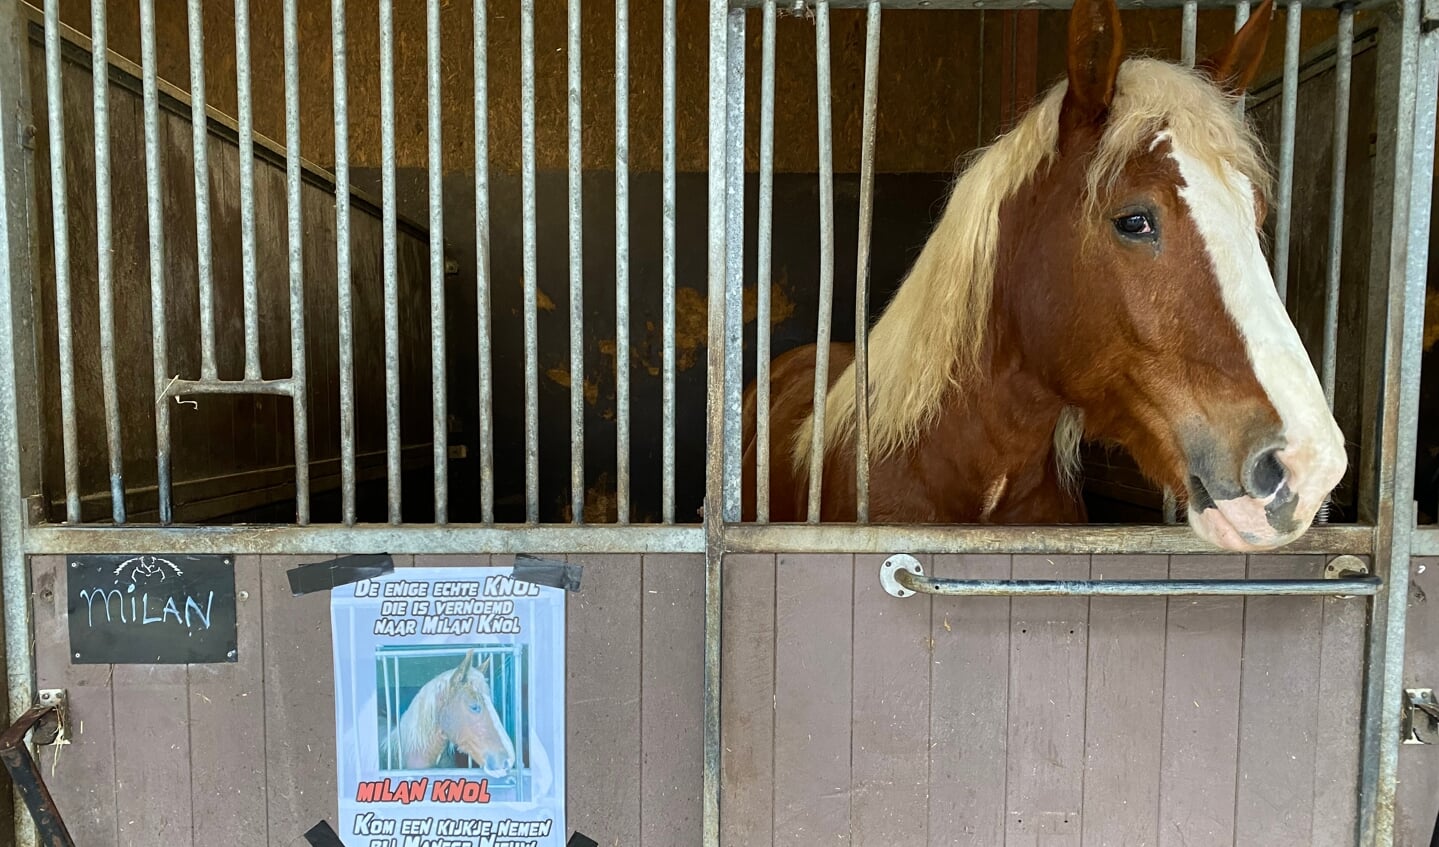 Sinds dinsdag is het officieel: dit paard van manege Nieuw Eldorado heet nu Milan Knol, vernoemd  naar de bekende YouTuber uit Soesterberg.